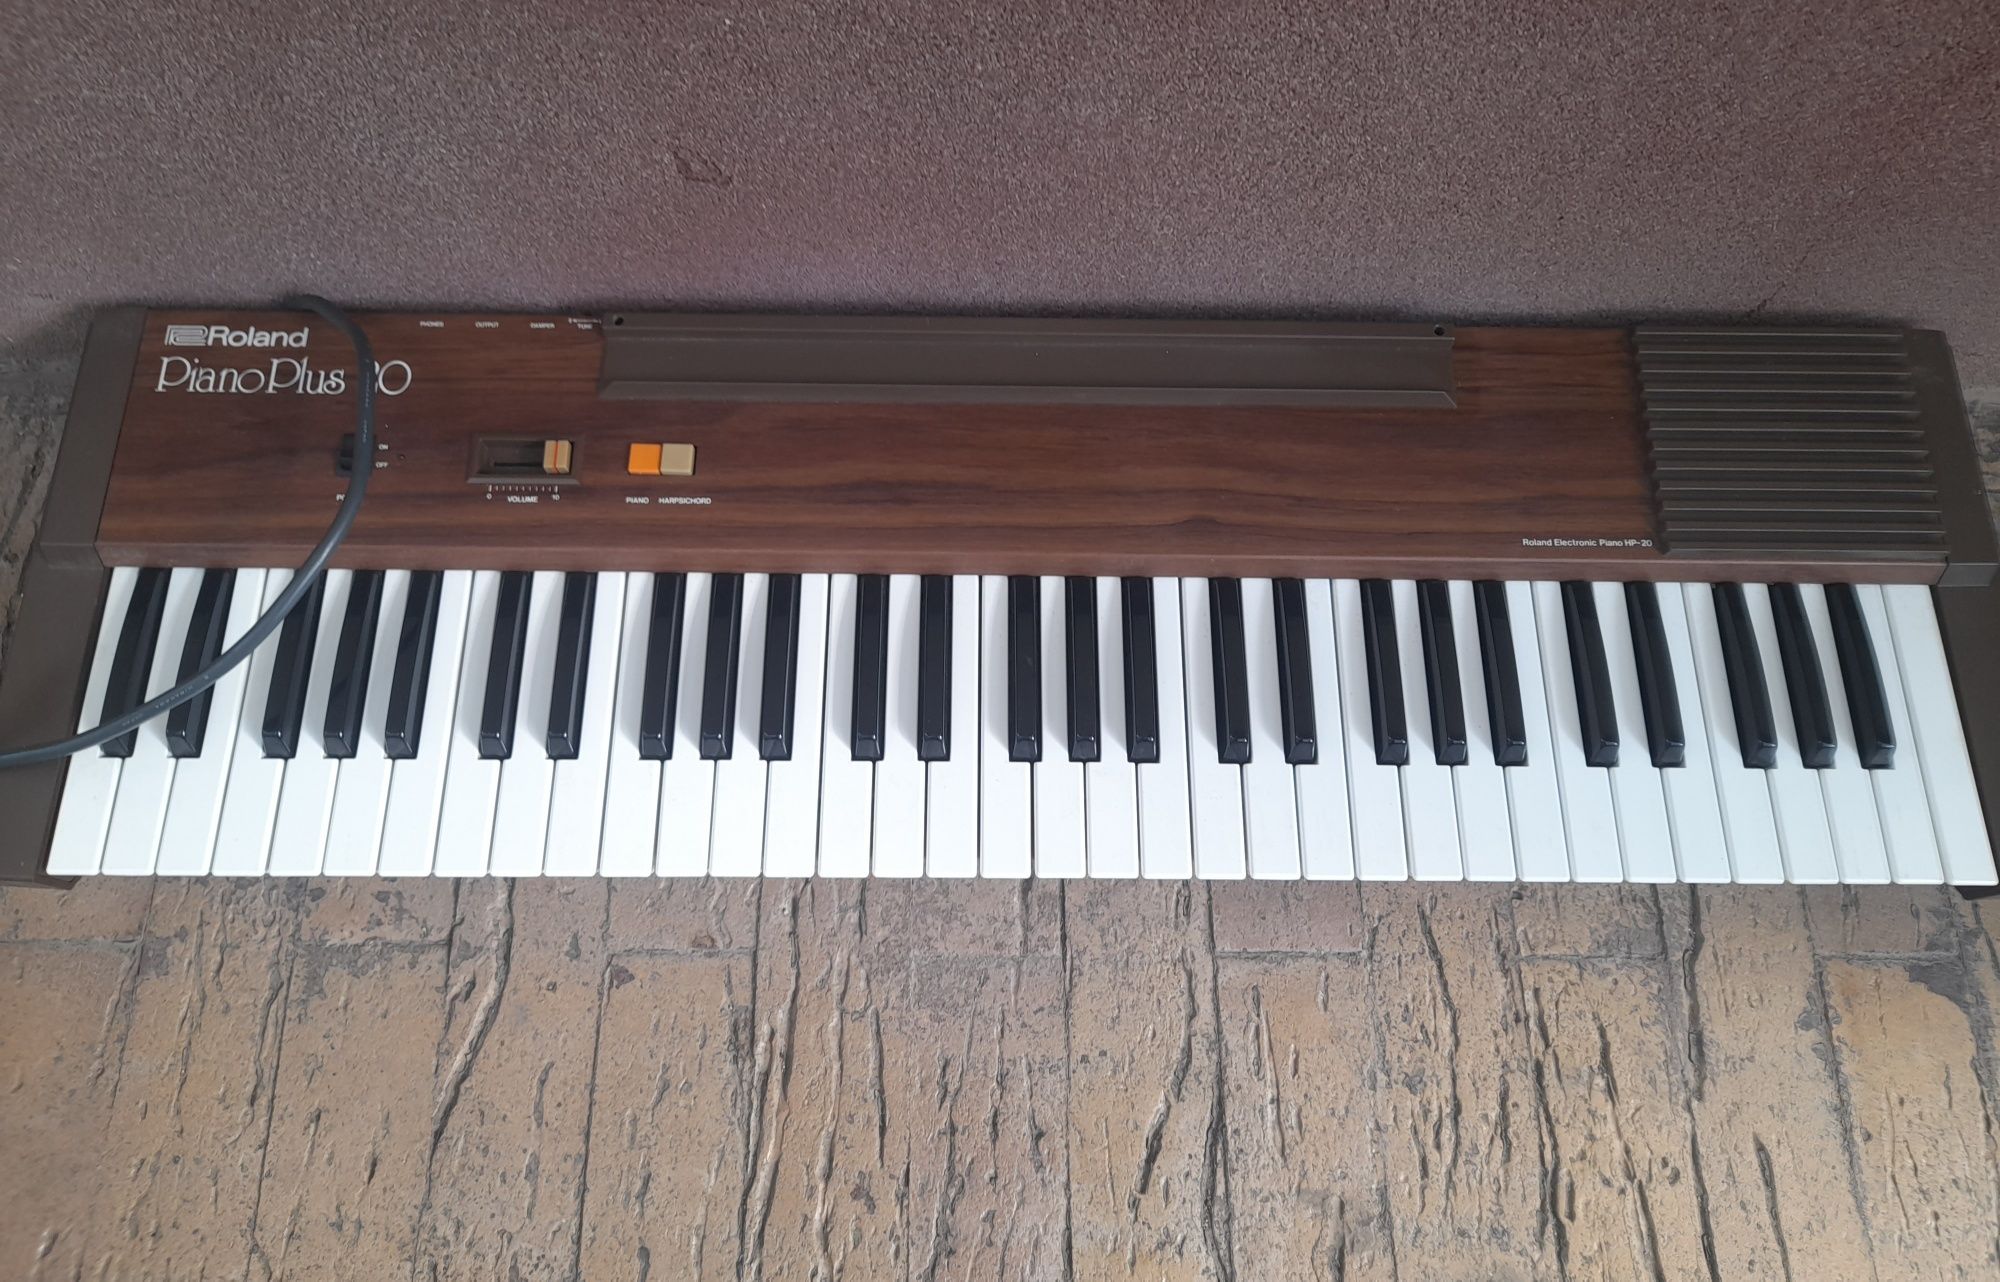 Roland HP-20 Piano Plus 20 ( DEFECT )